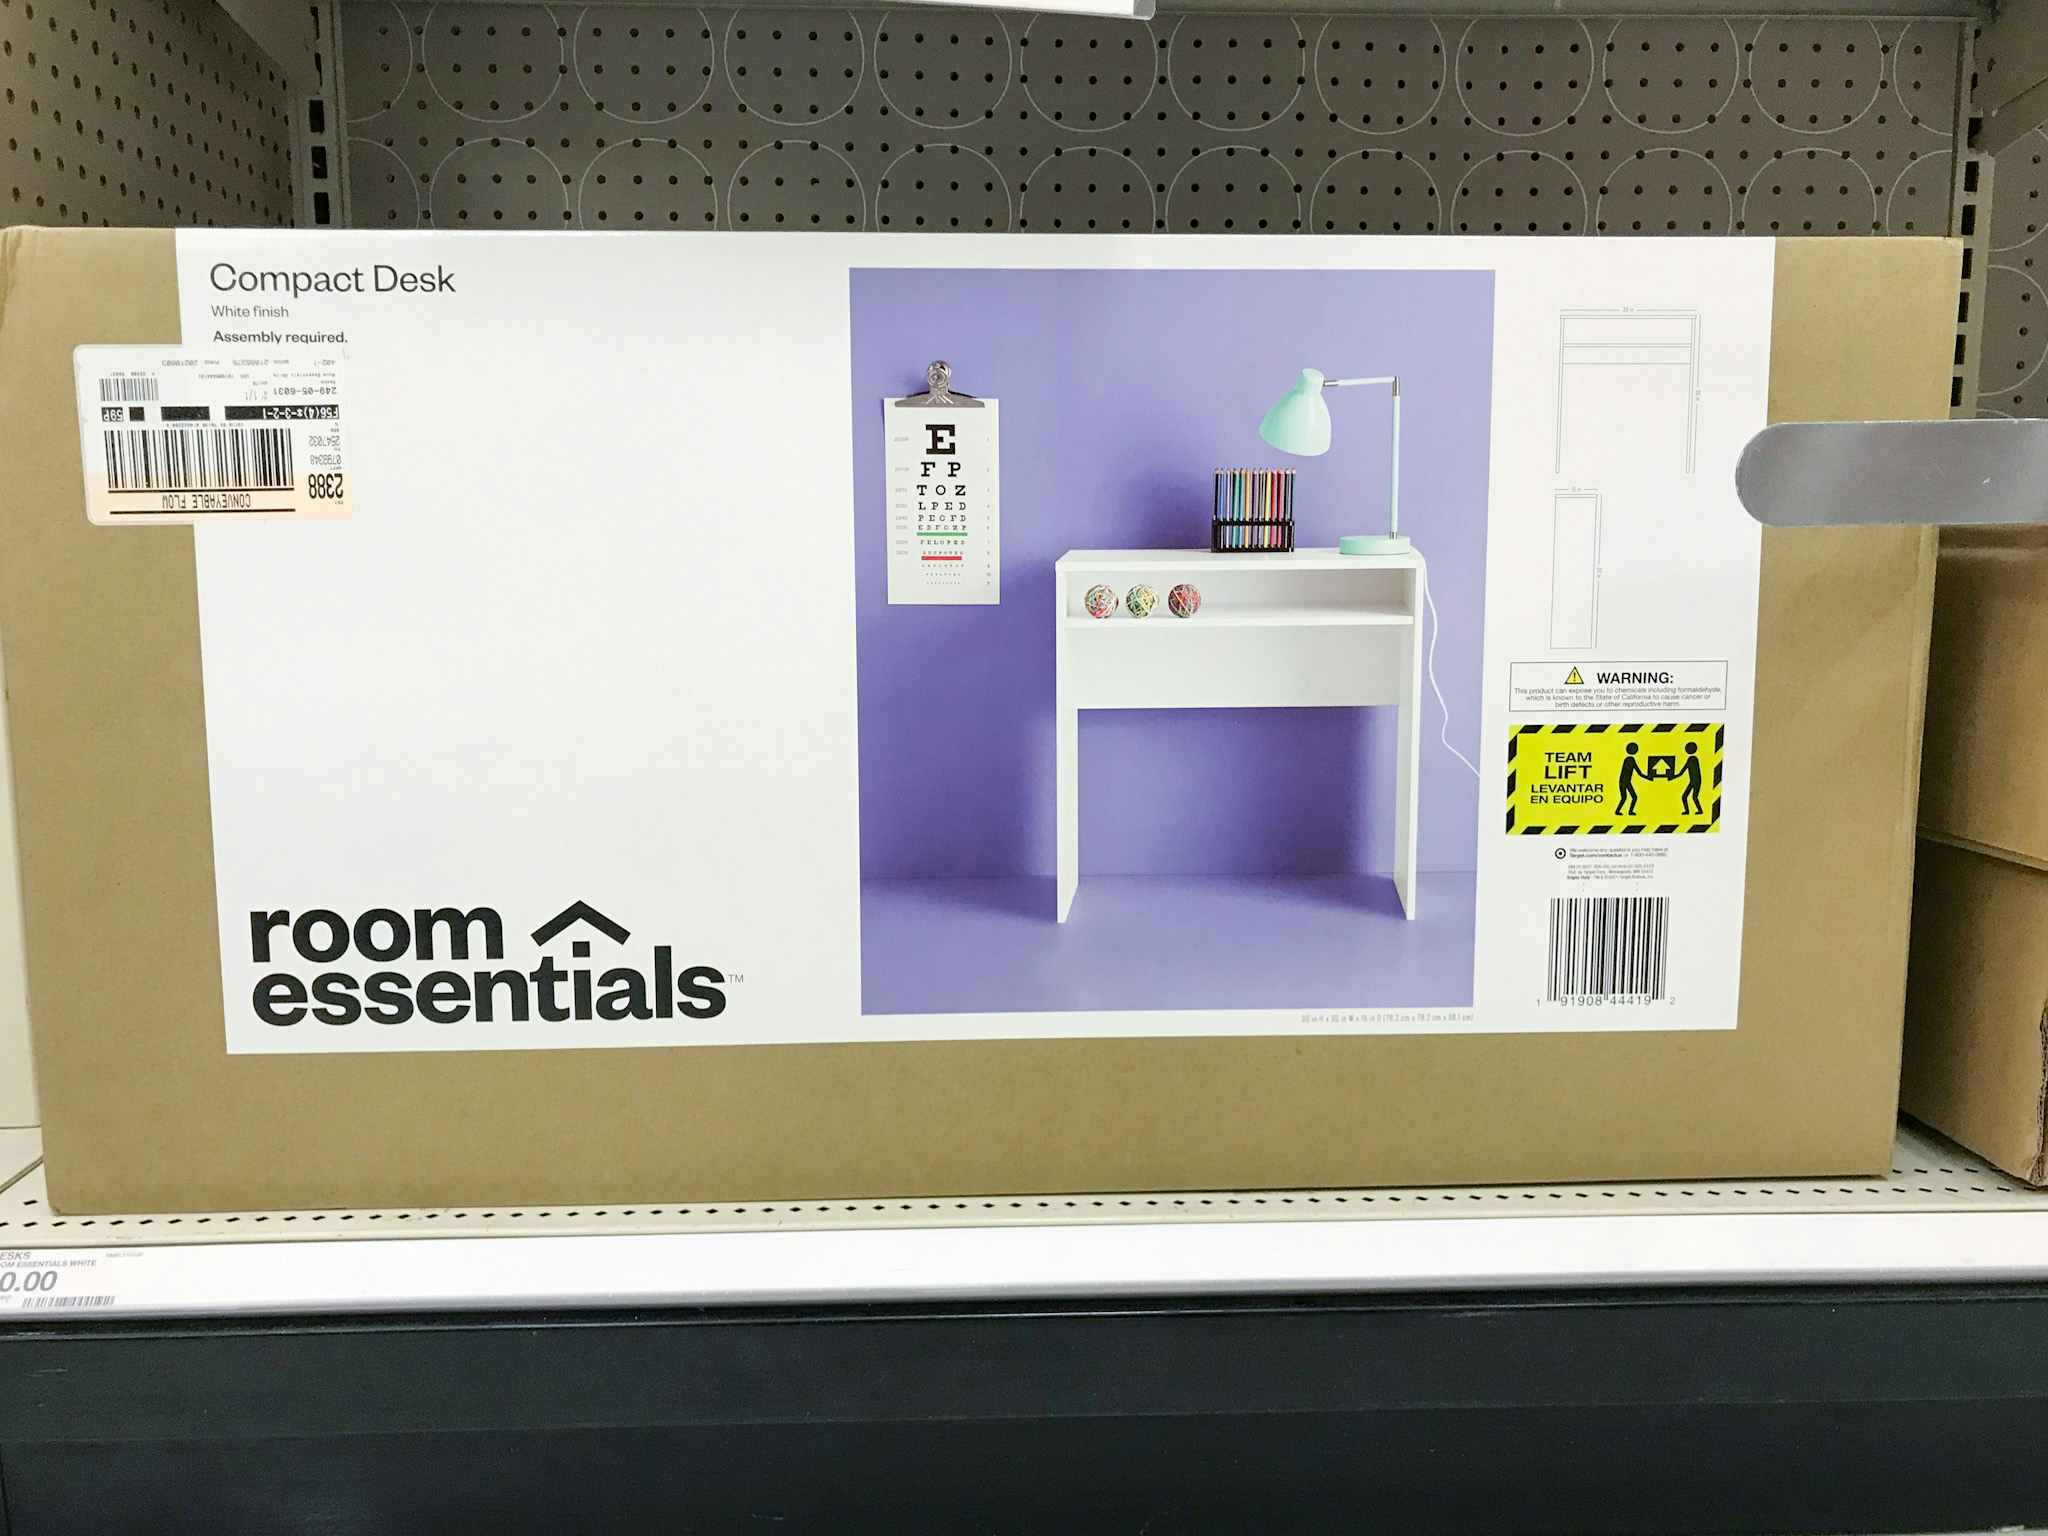 room essentials compact desk on a target shelf